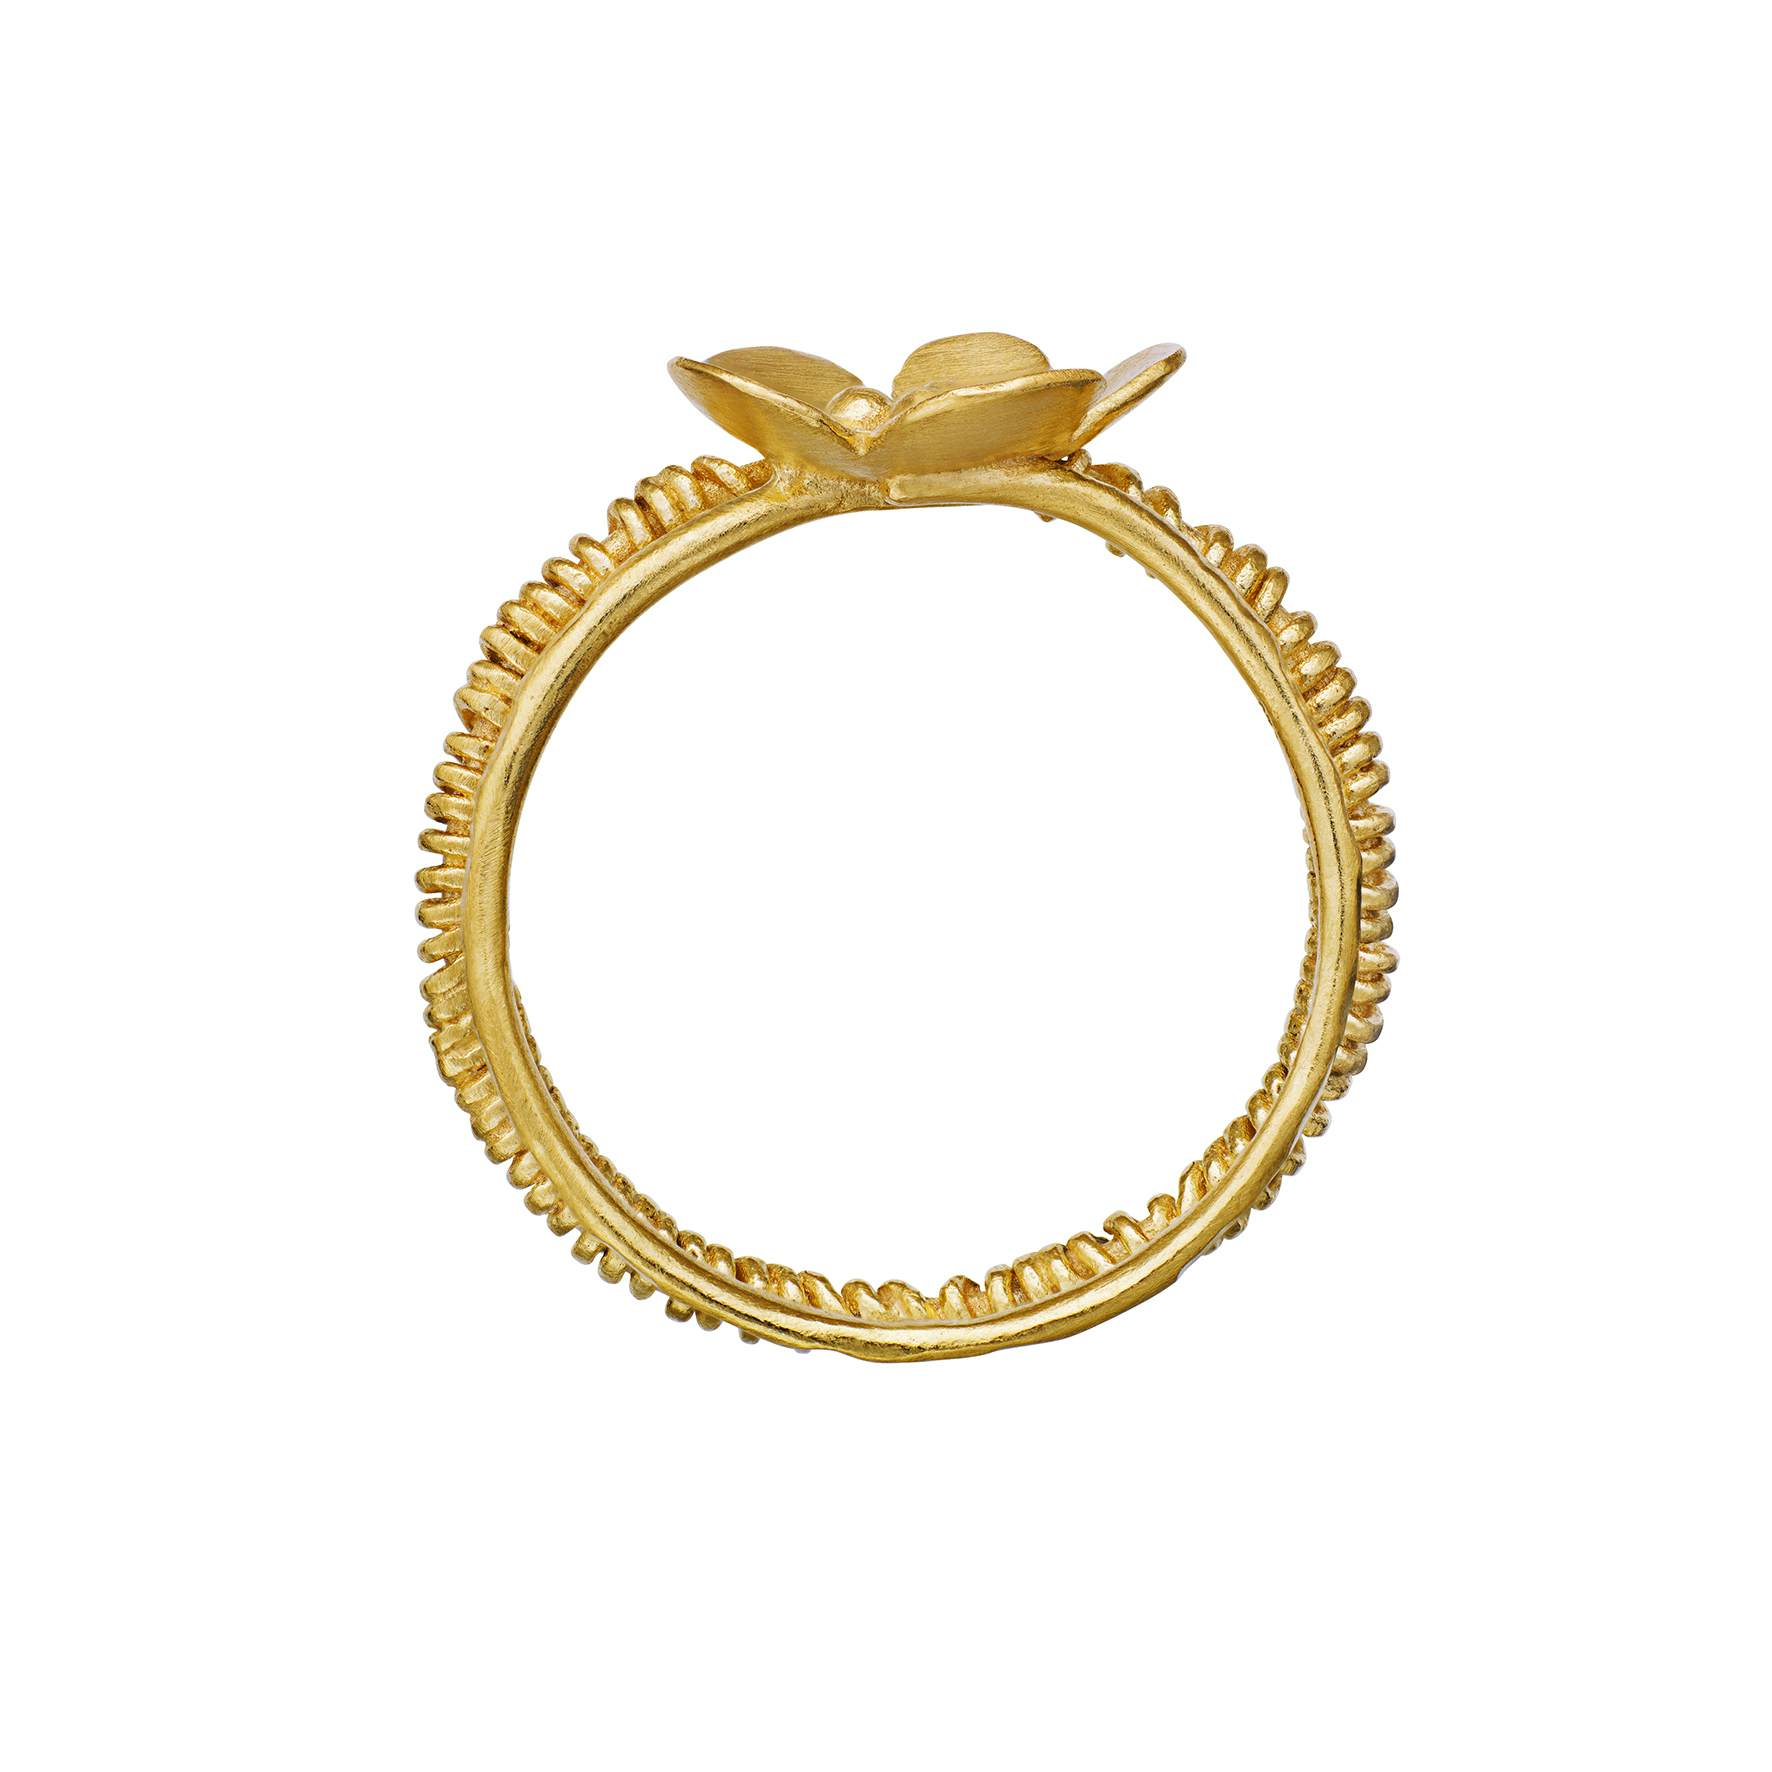 Bellflower Ring from Maanesten in Goldplated-Silver Sterling 925